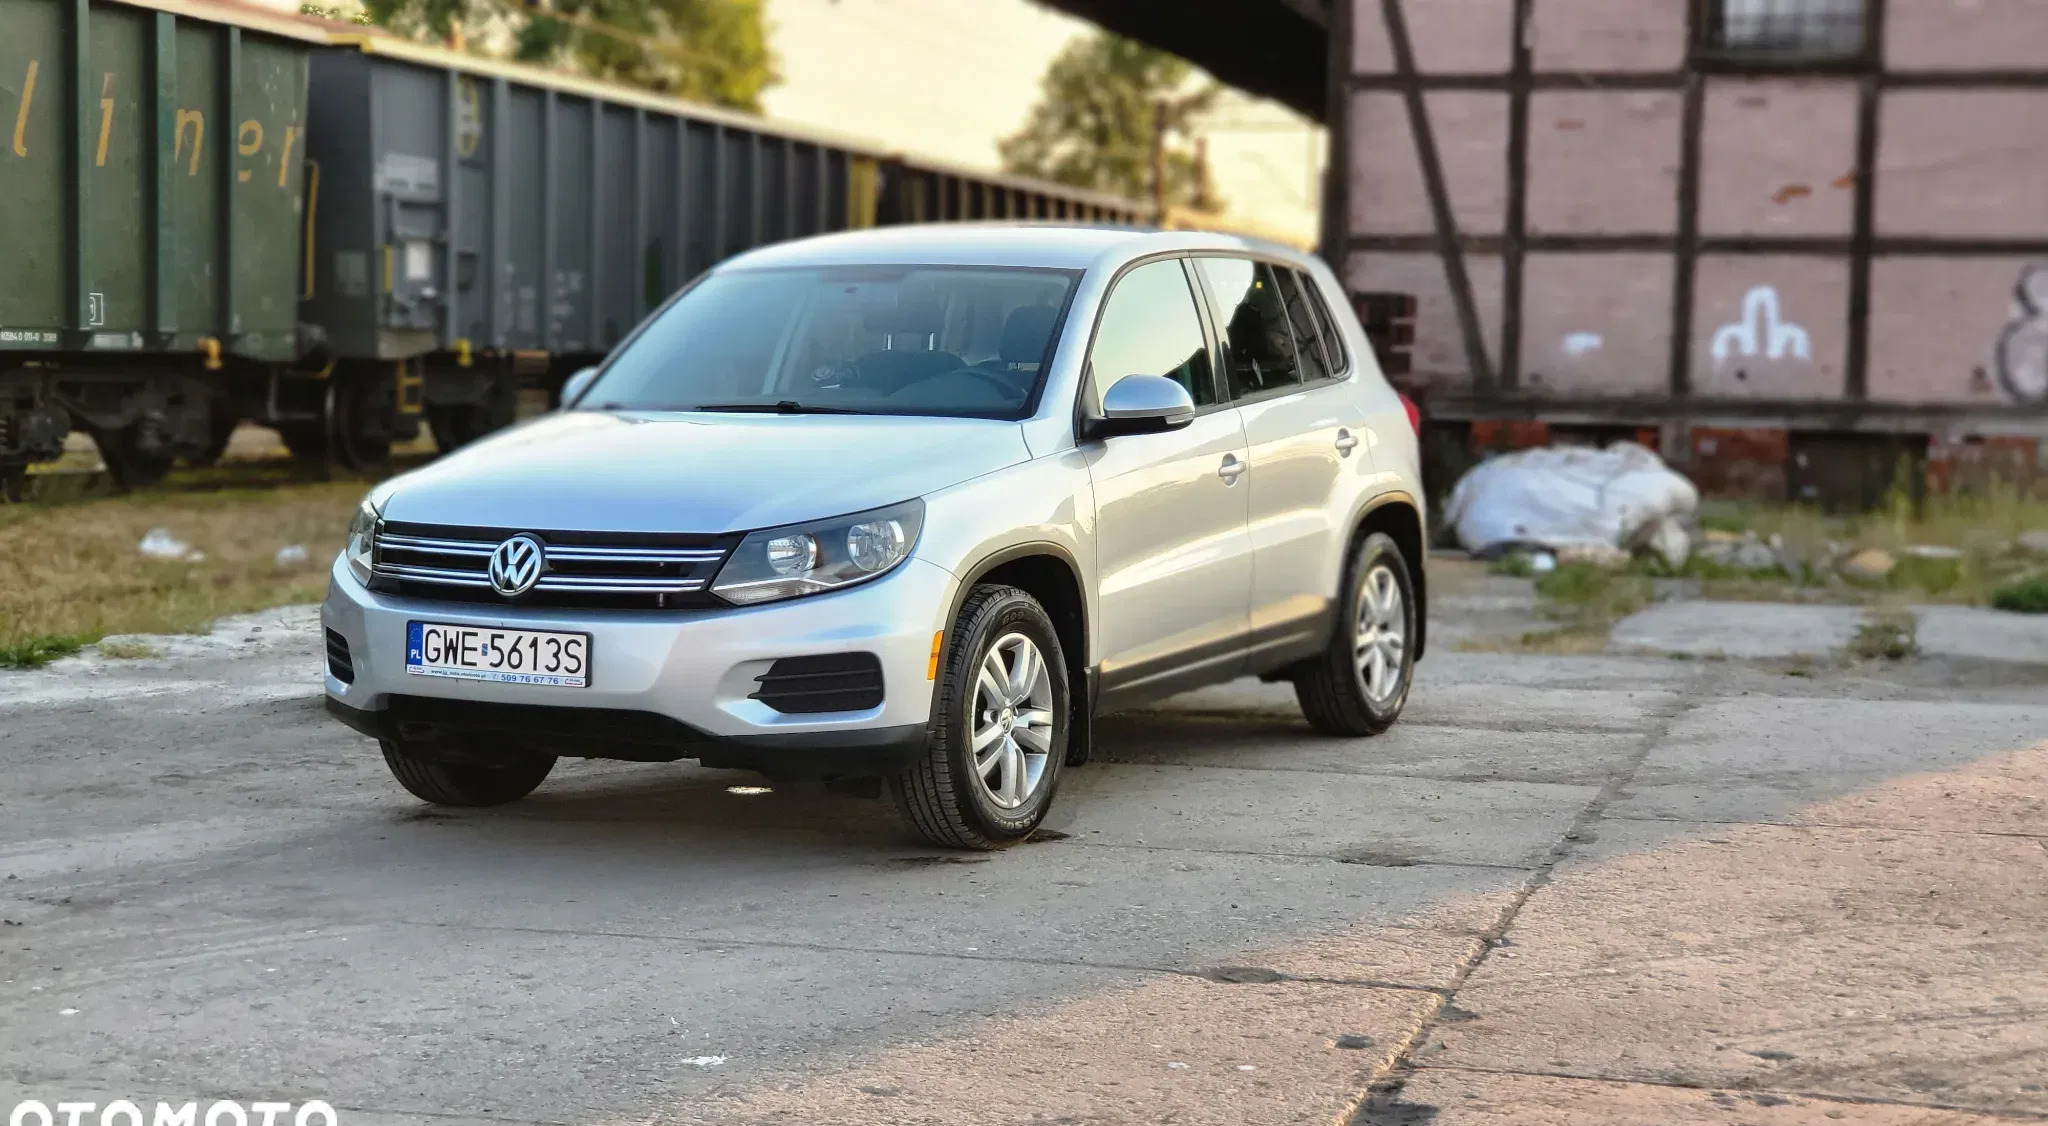 volkswagen tiguan Volkswagen Tiguan cena 43900 przebieg: 153000, rok produkcji 2014 z Wejherowo